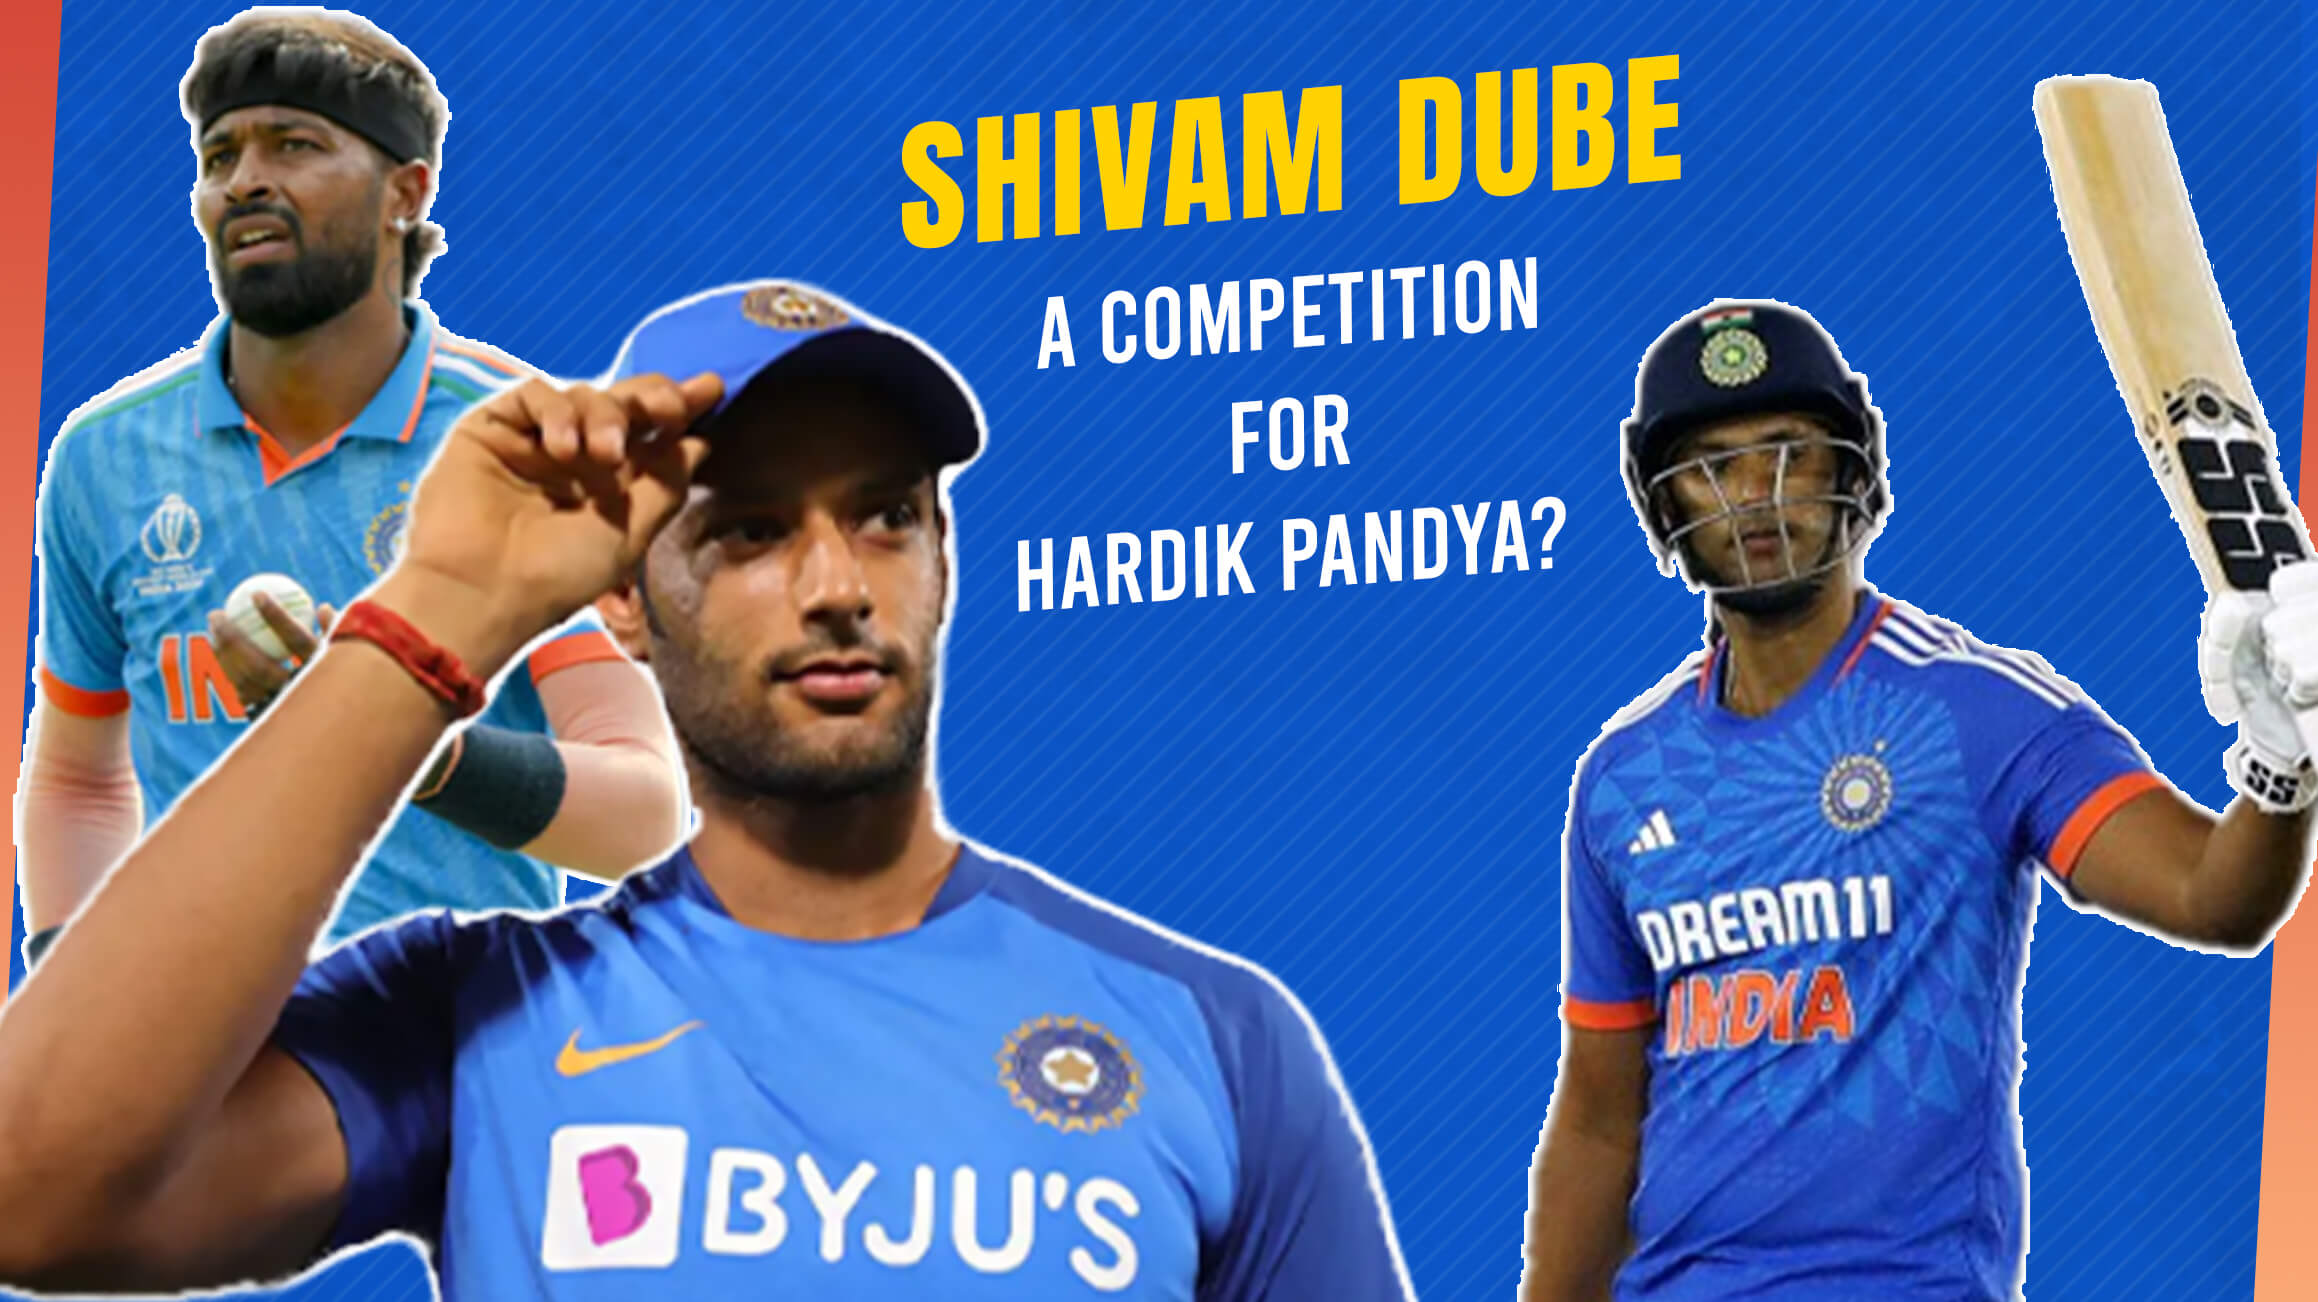 Shivam Dube: A Competition for Hardik Pandya?